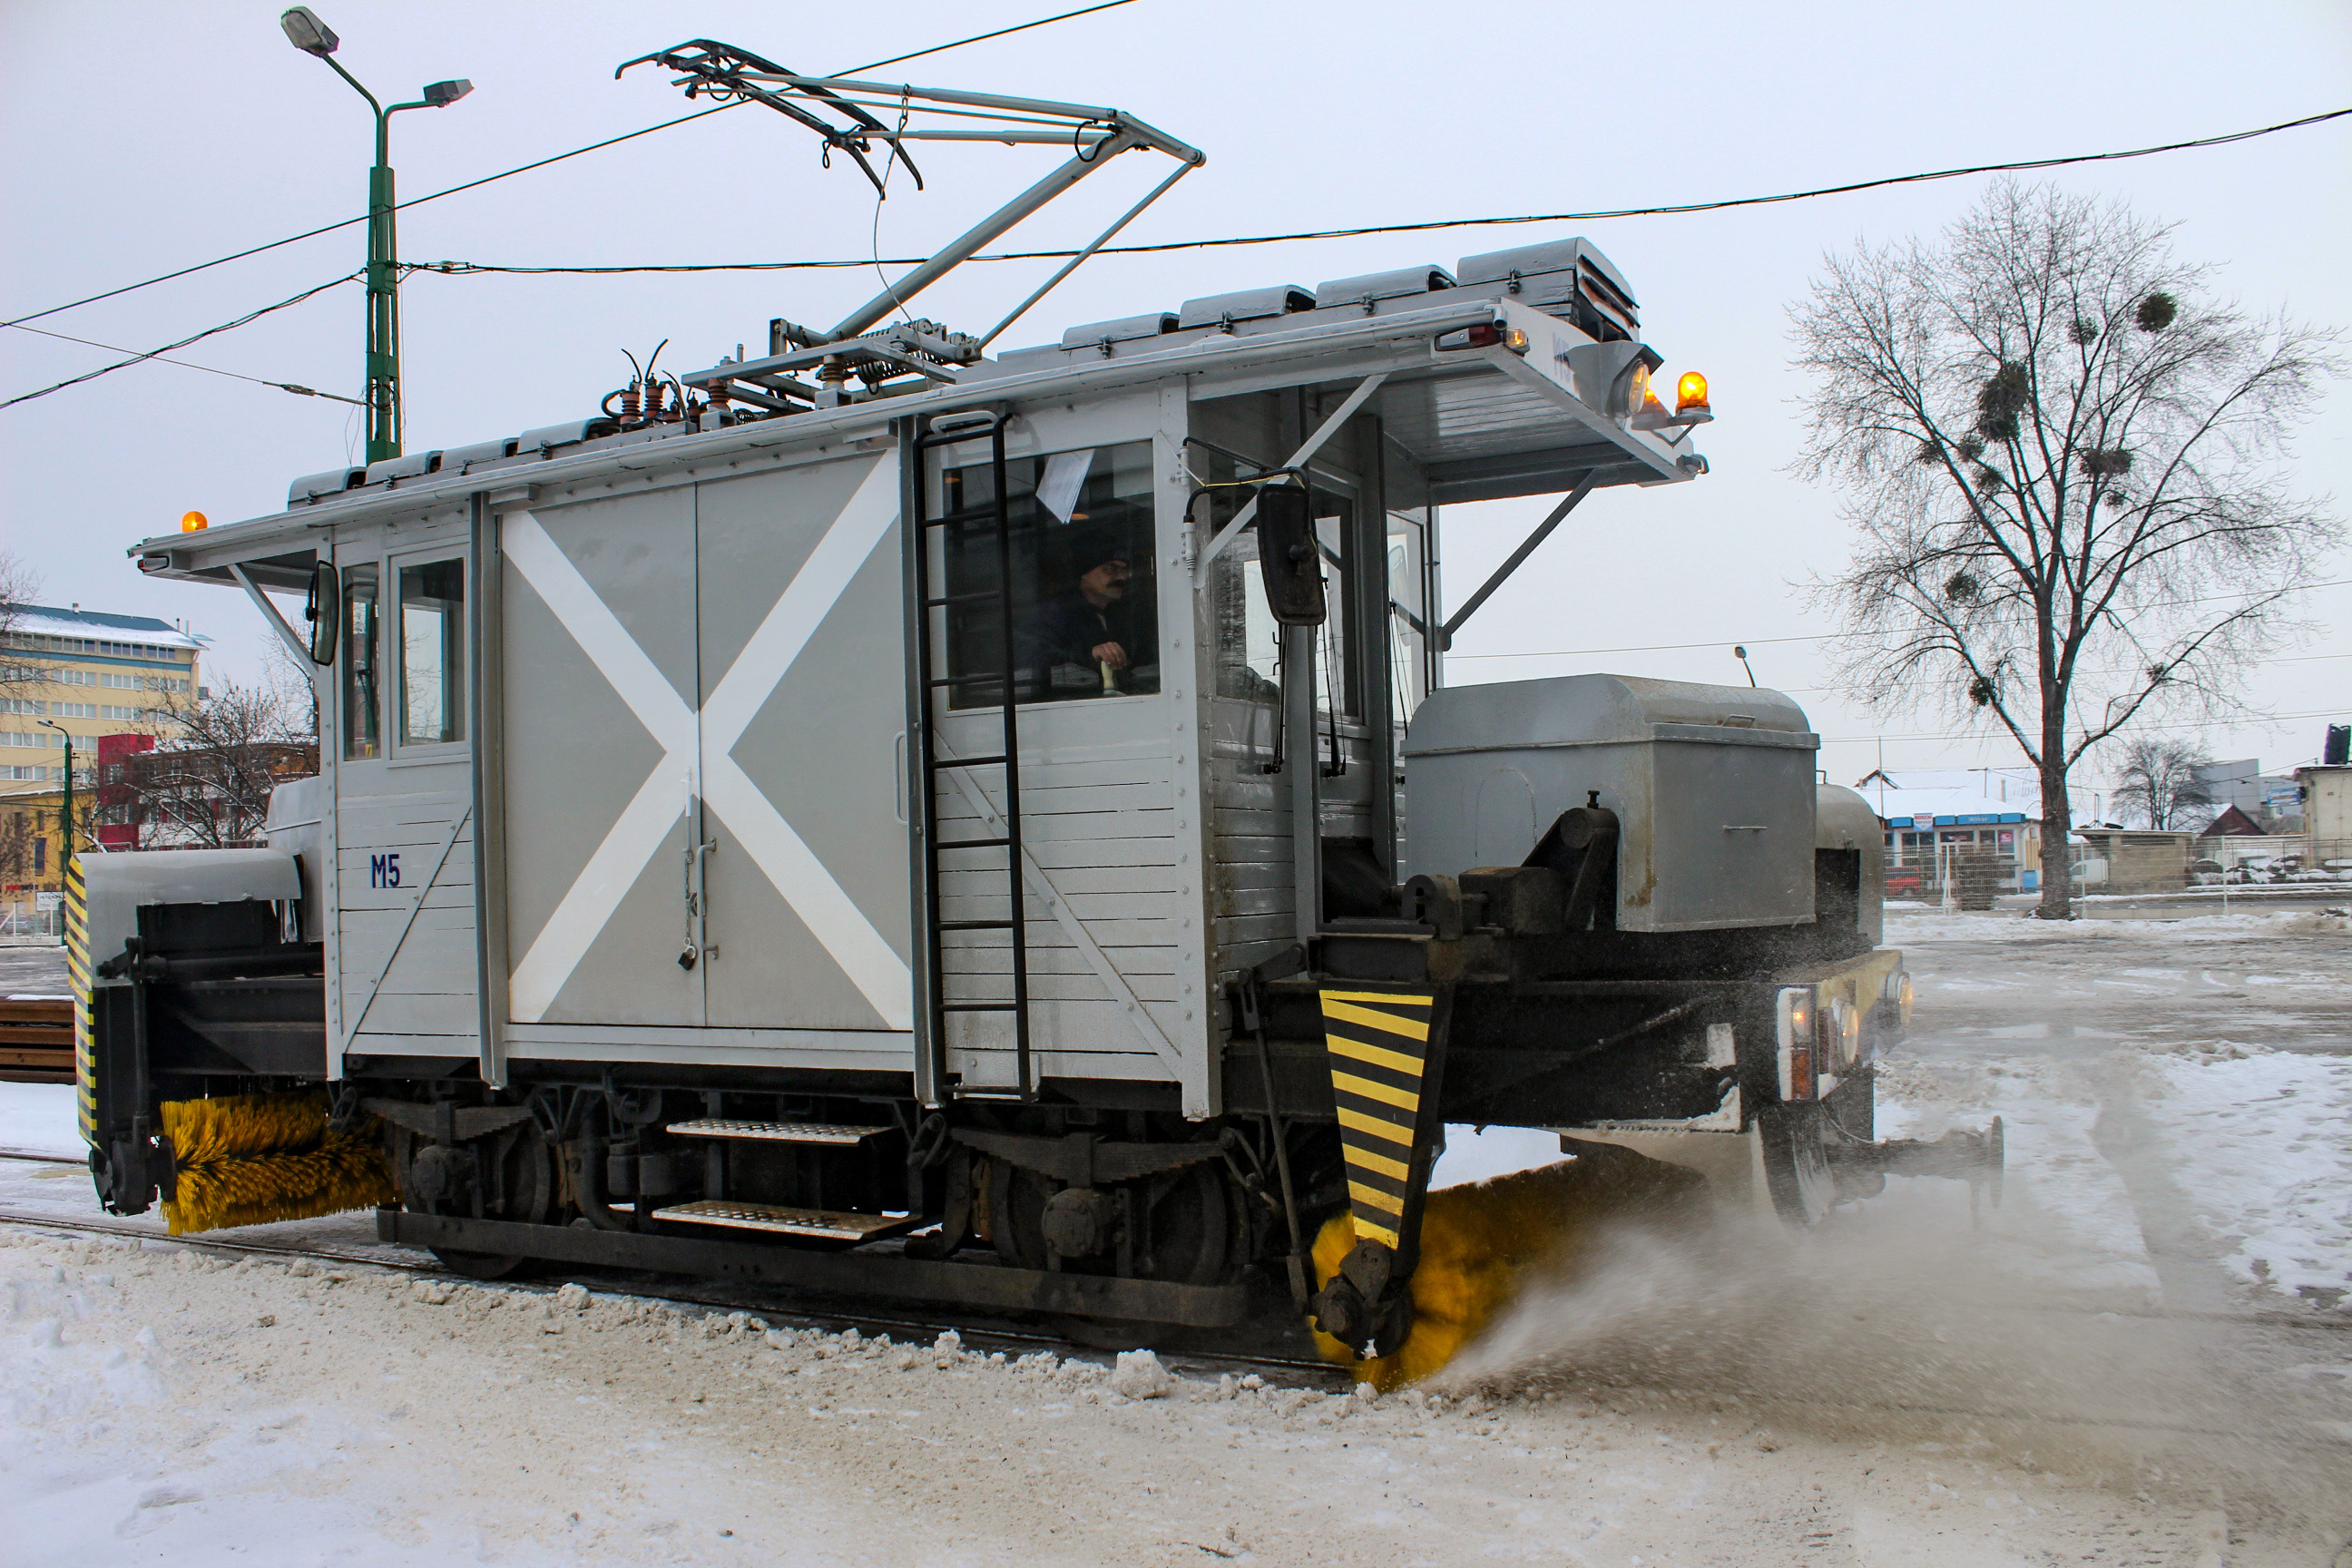 M5 snow sweeper nostalgia tram